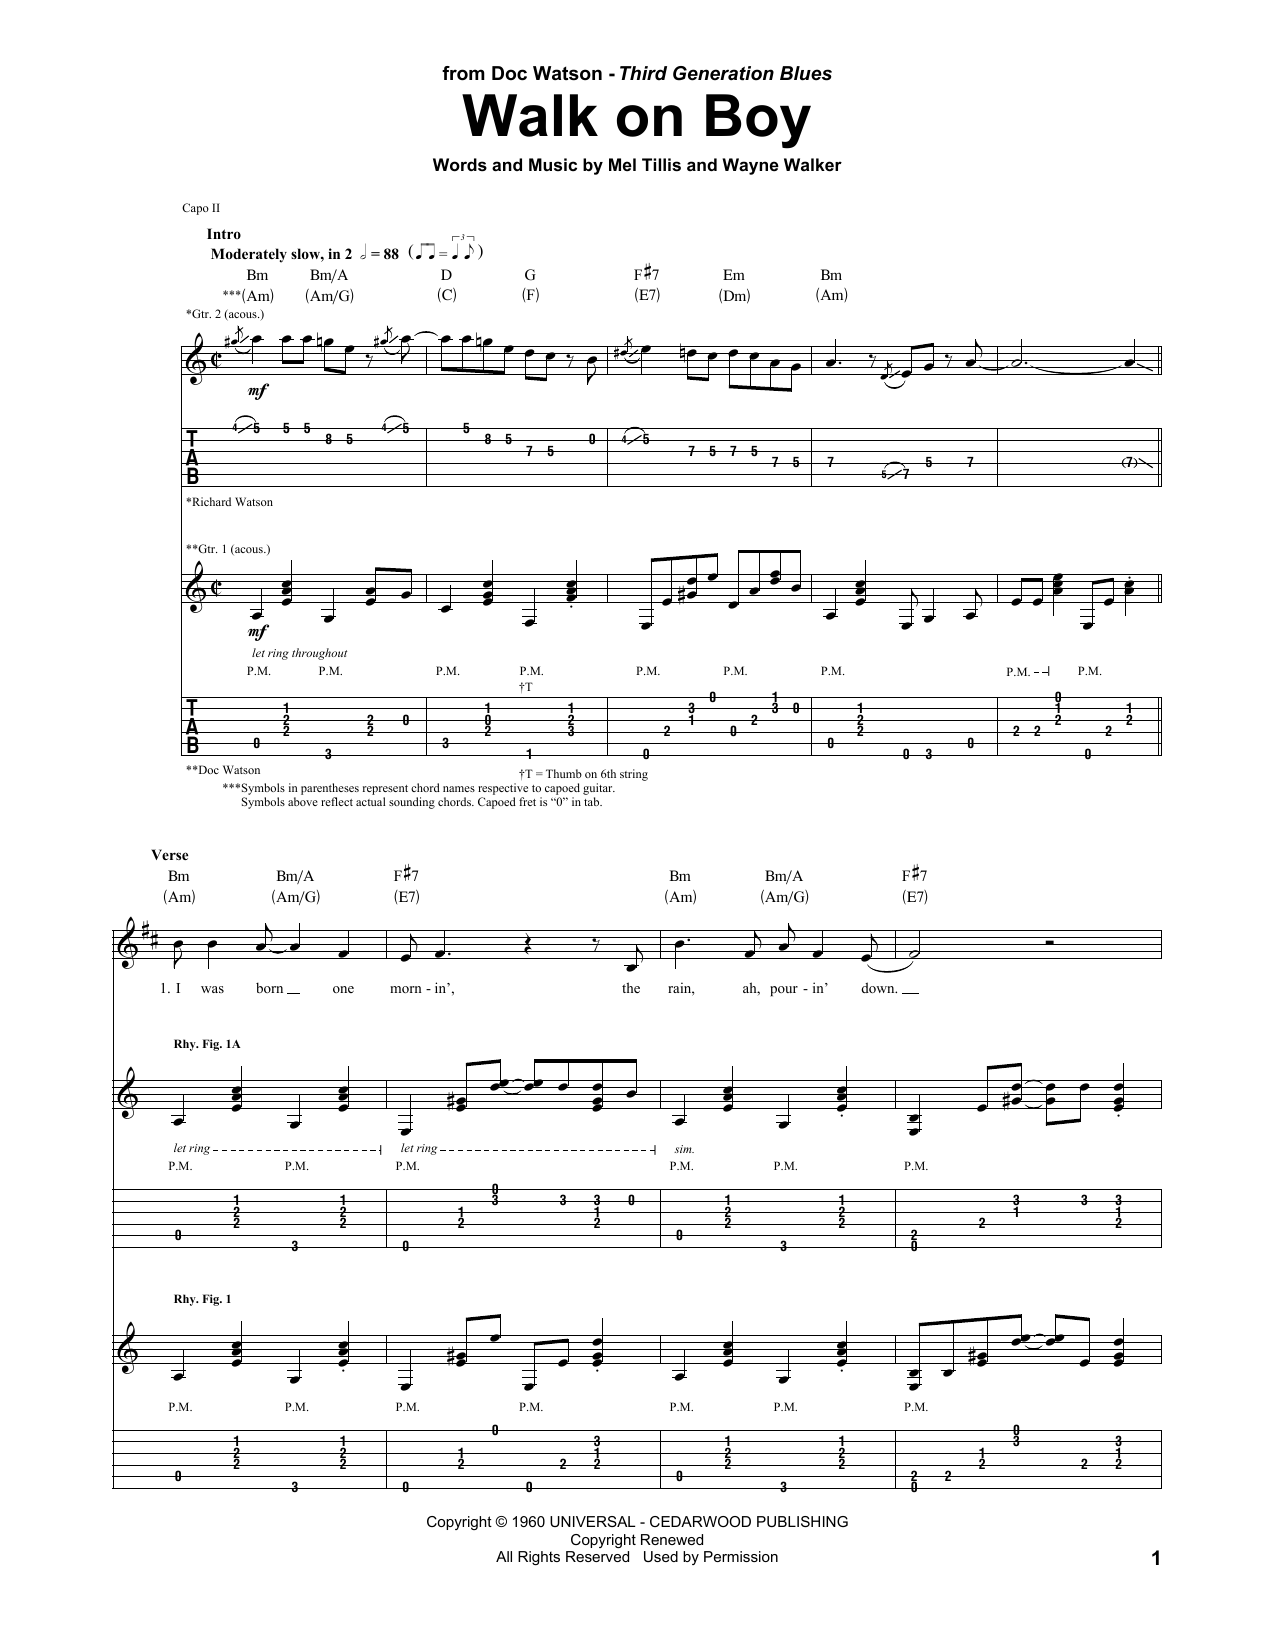 Doc Watson Walk On Boy Sheet Music Notes & Chords for Guitar Tab - Download or Print PDF